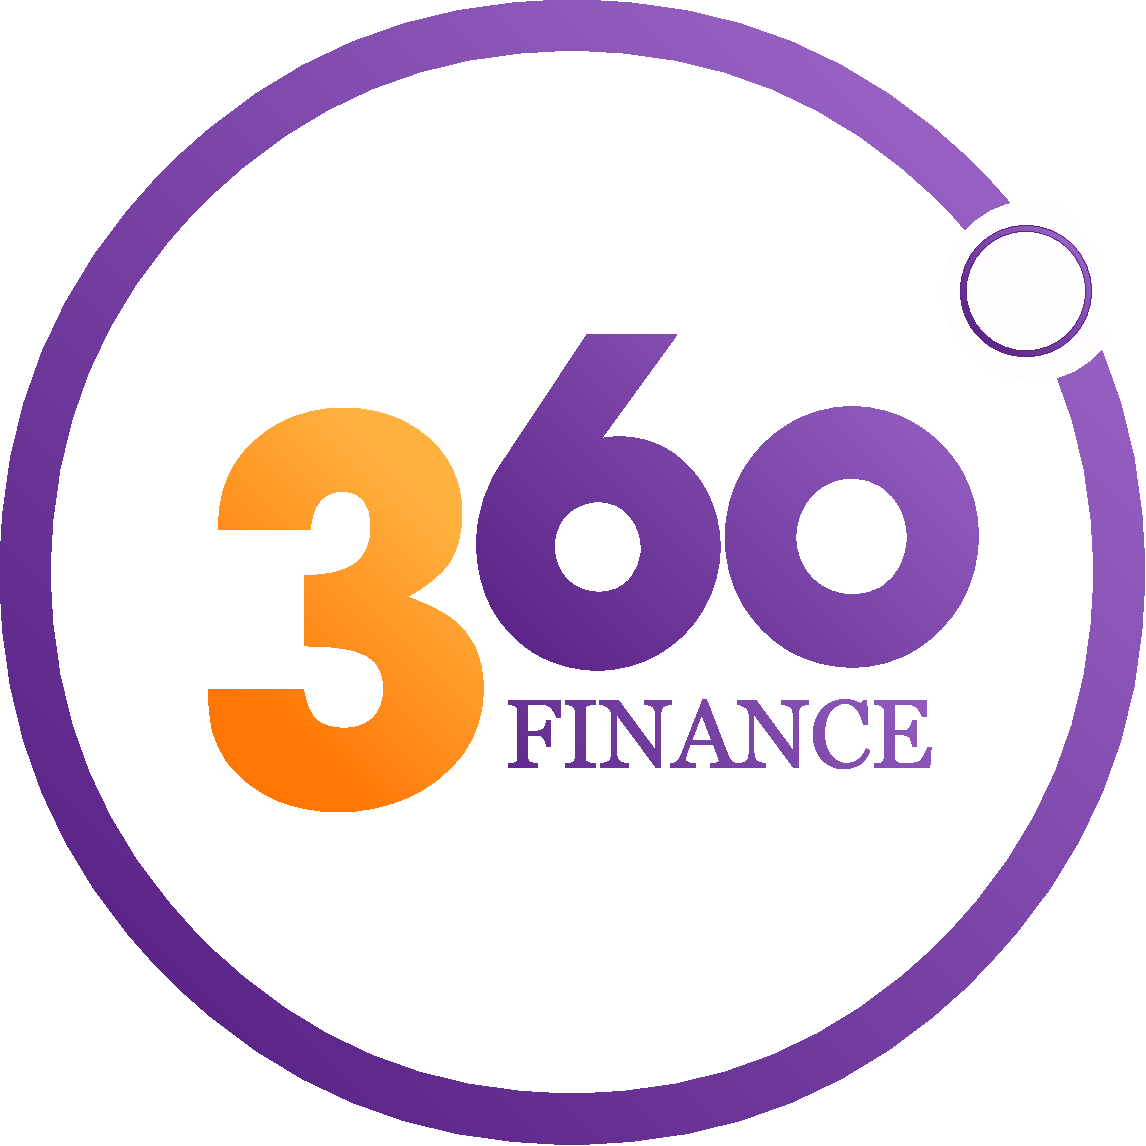 360 Degree Finance